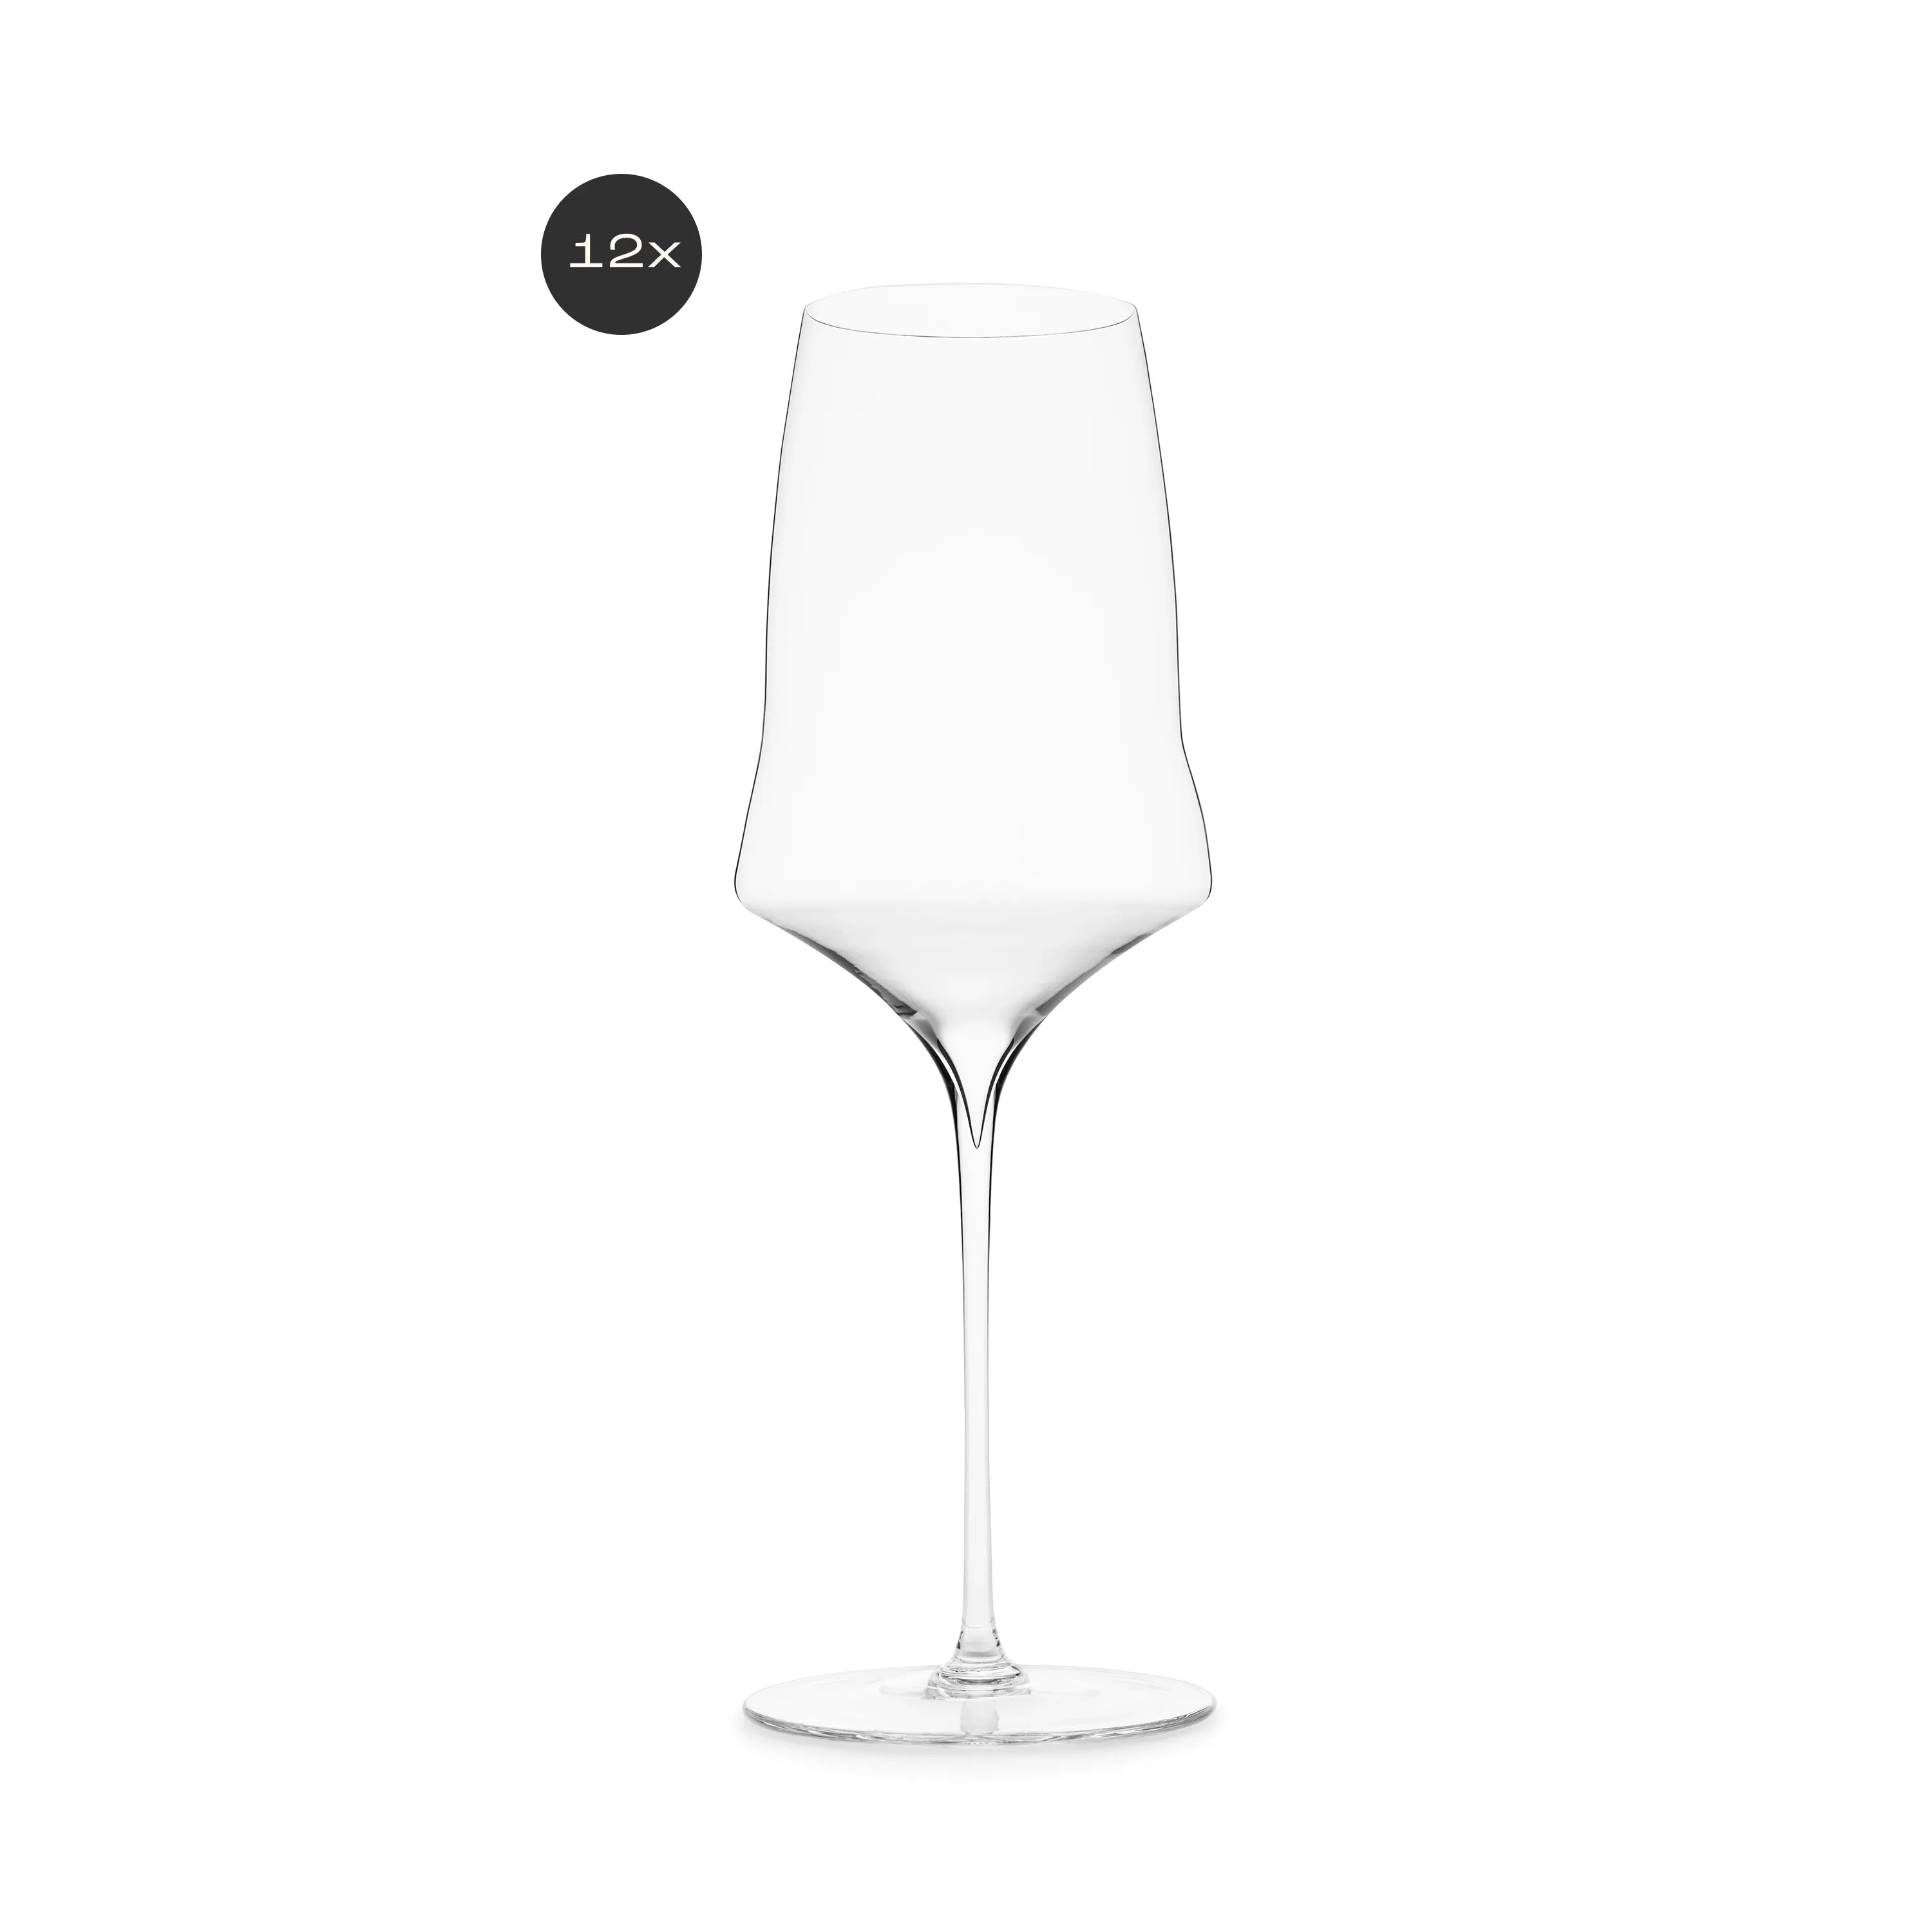 JOSEPHINE No 1 by Josephinenhütte – White wine glasses #Set_Set of 12